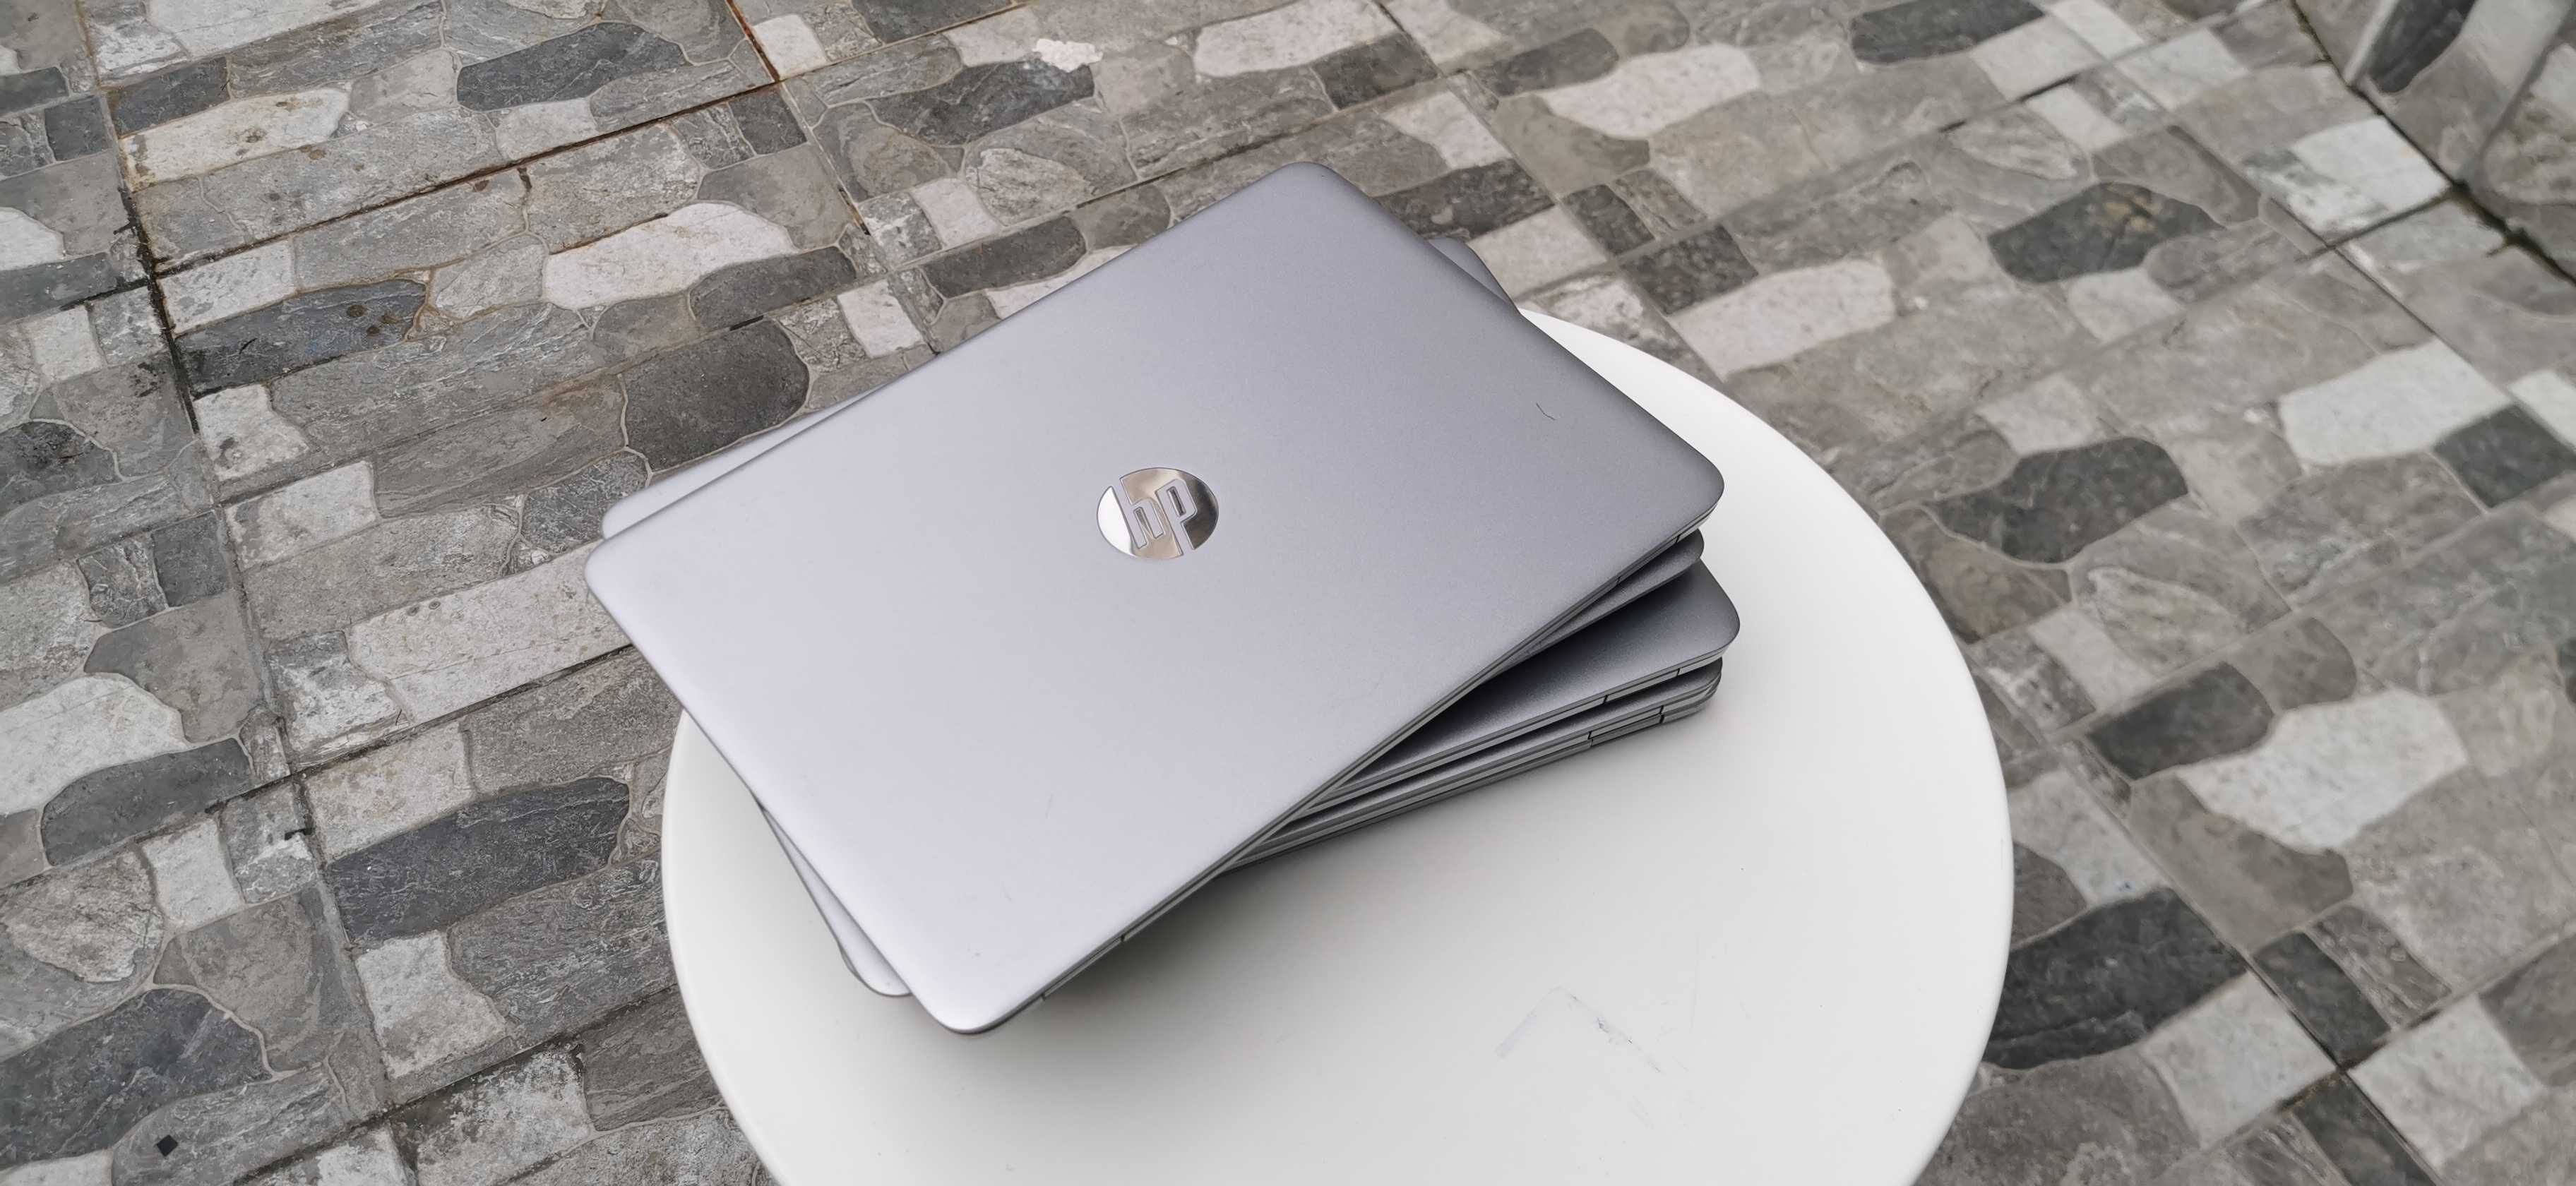 HP EliteBook 840 G3 ,128 SSD M.2 + 500 HDD, 8GB DDR4,Taste Iluminate